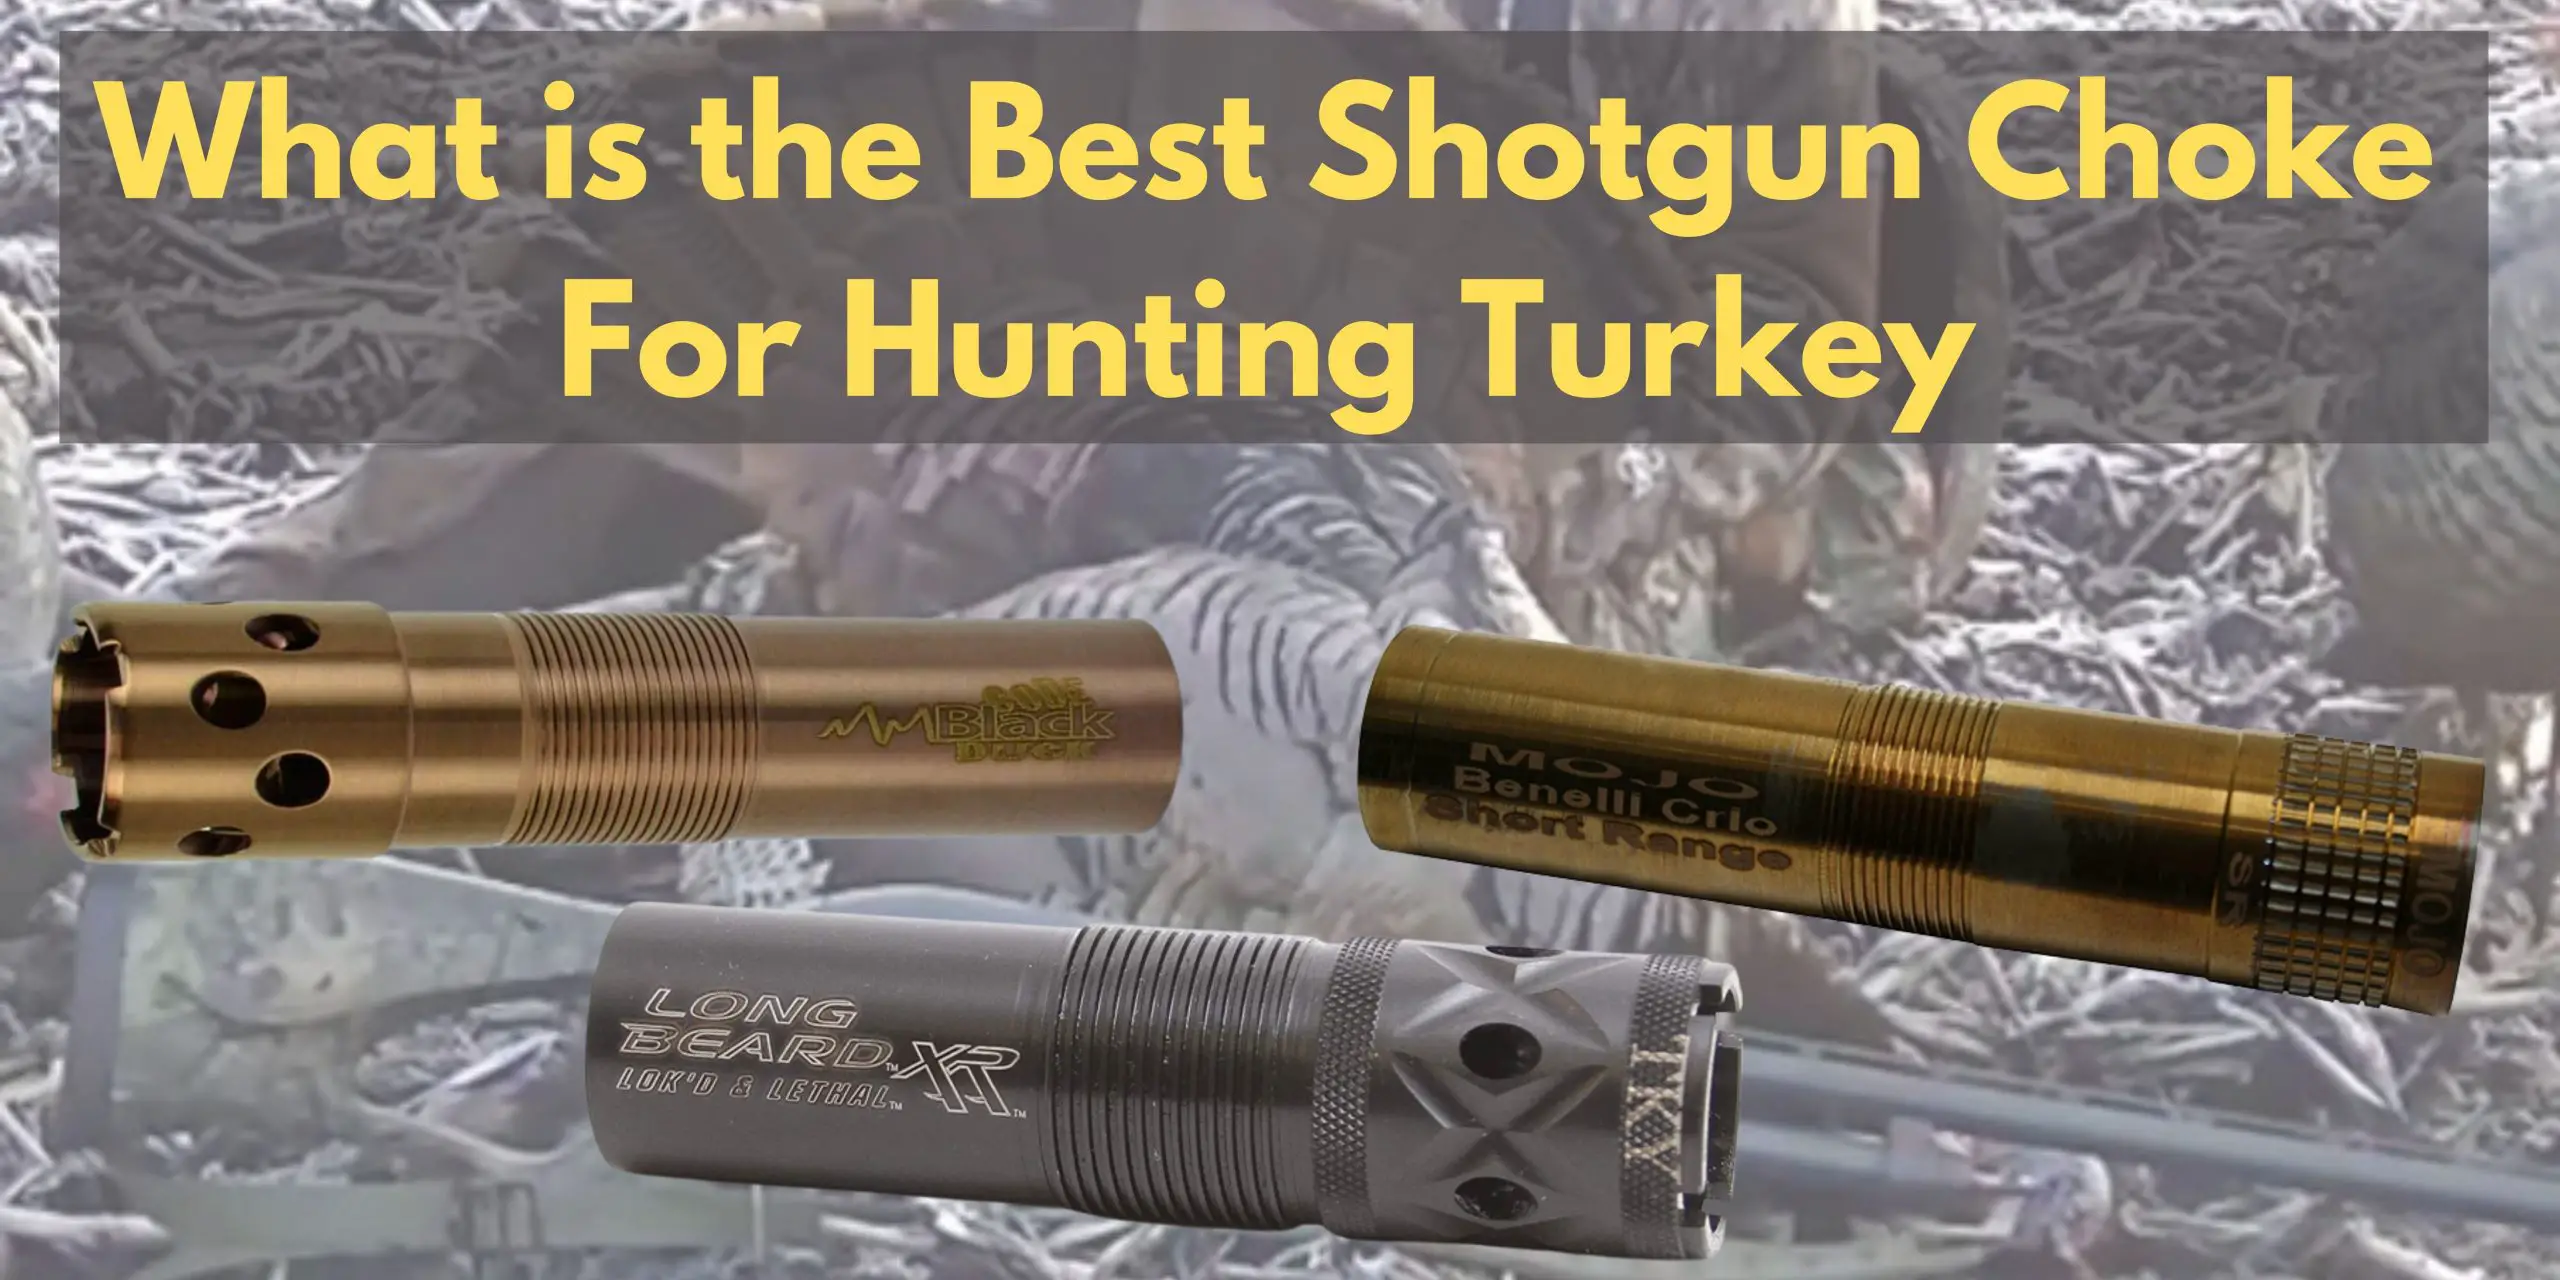 Best shotgun choke for hunting turkey